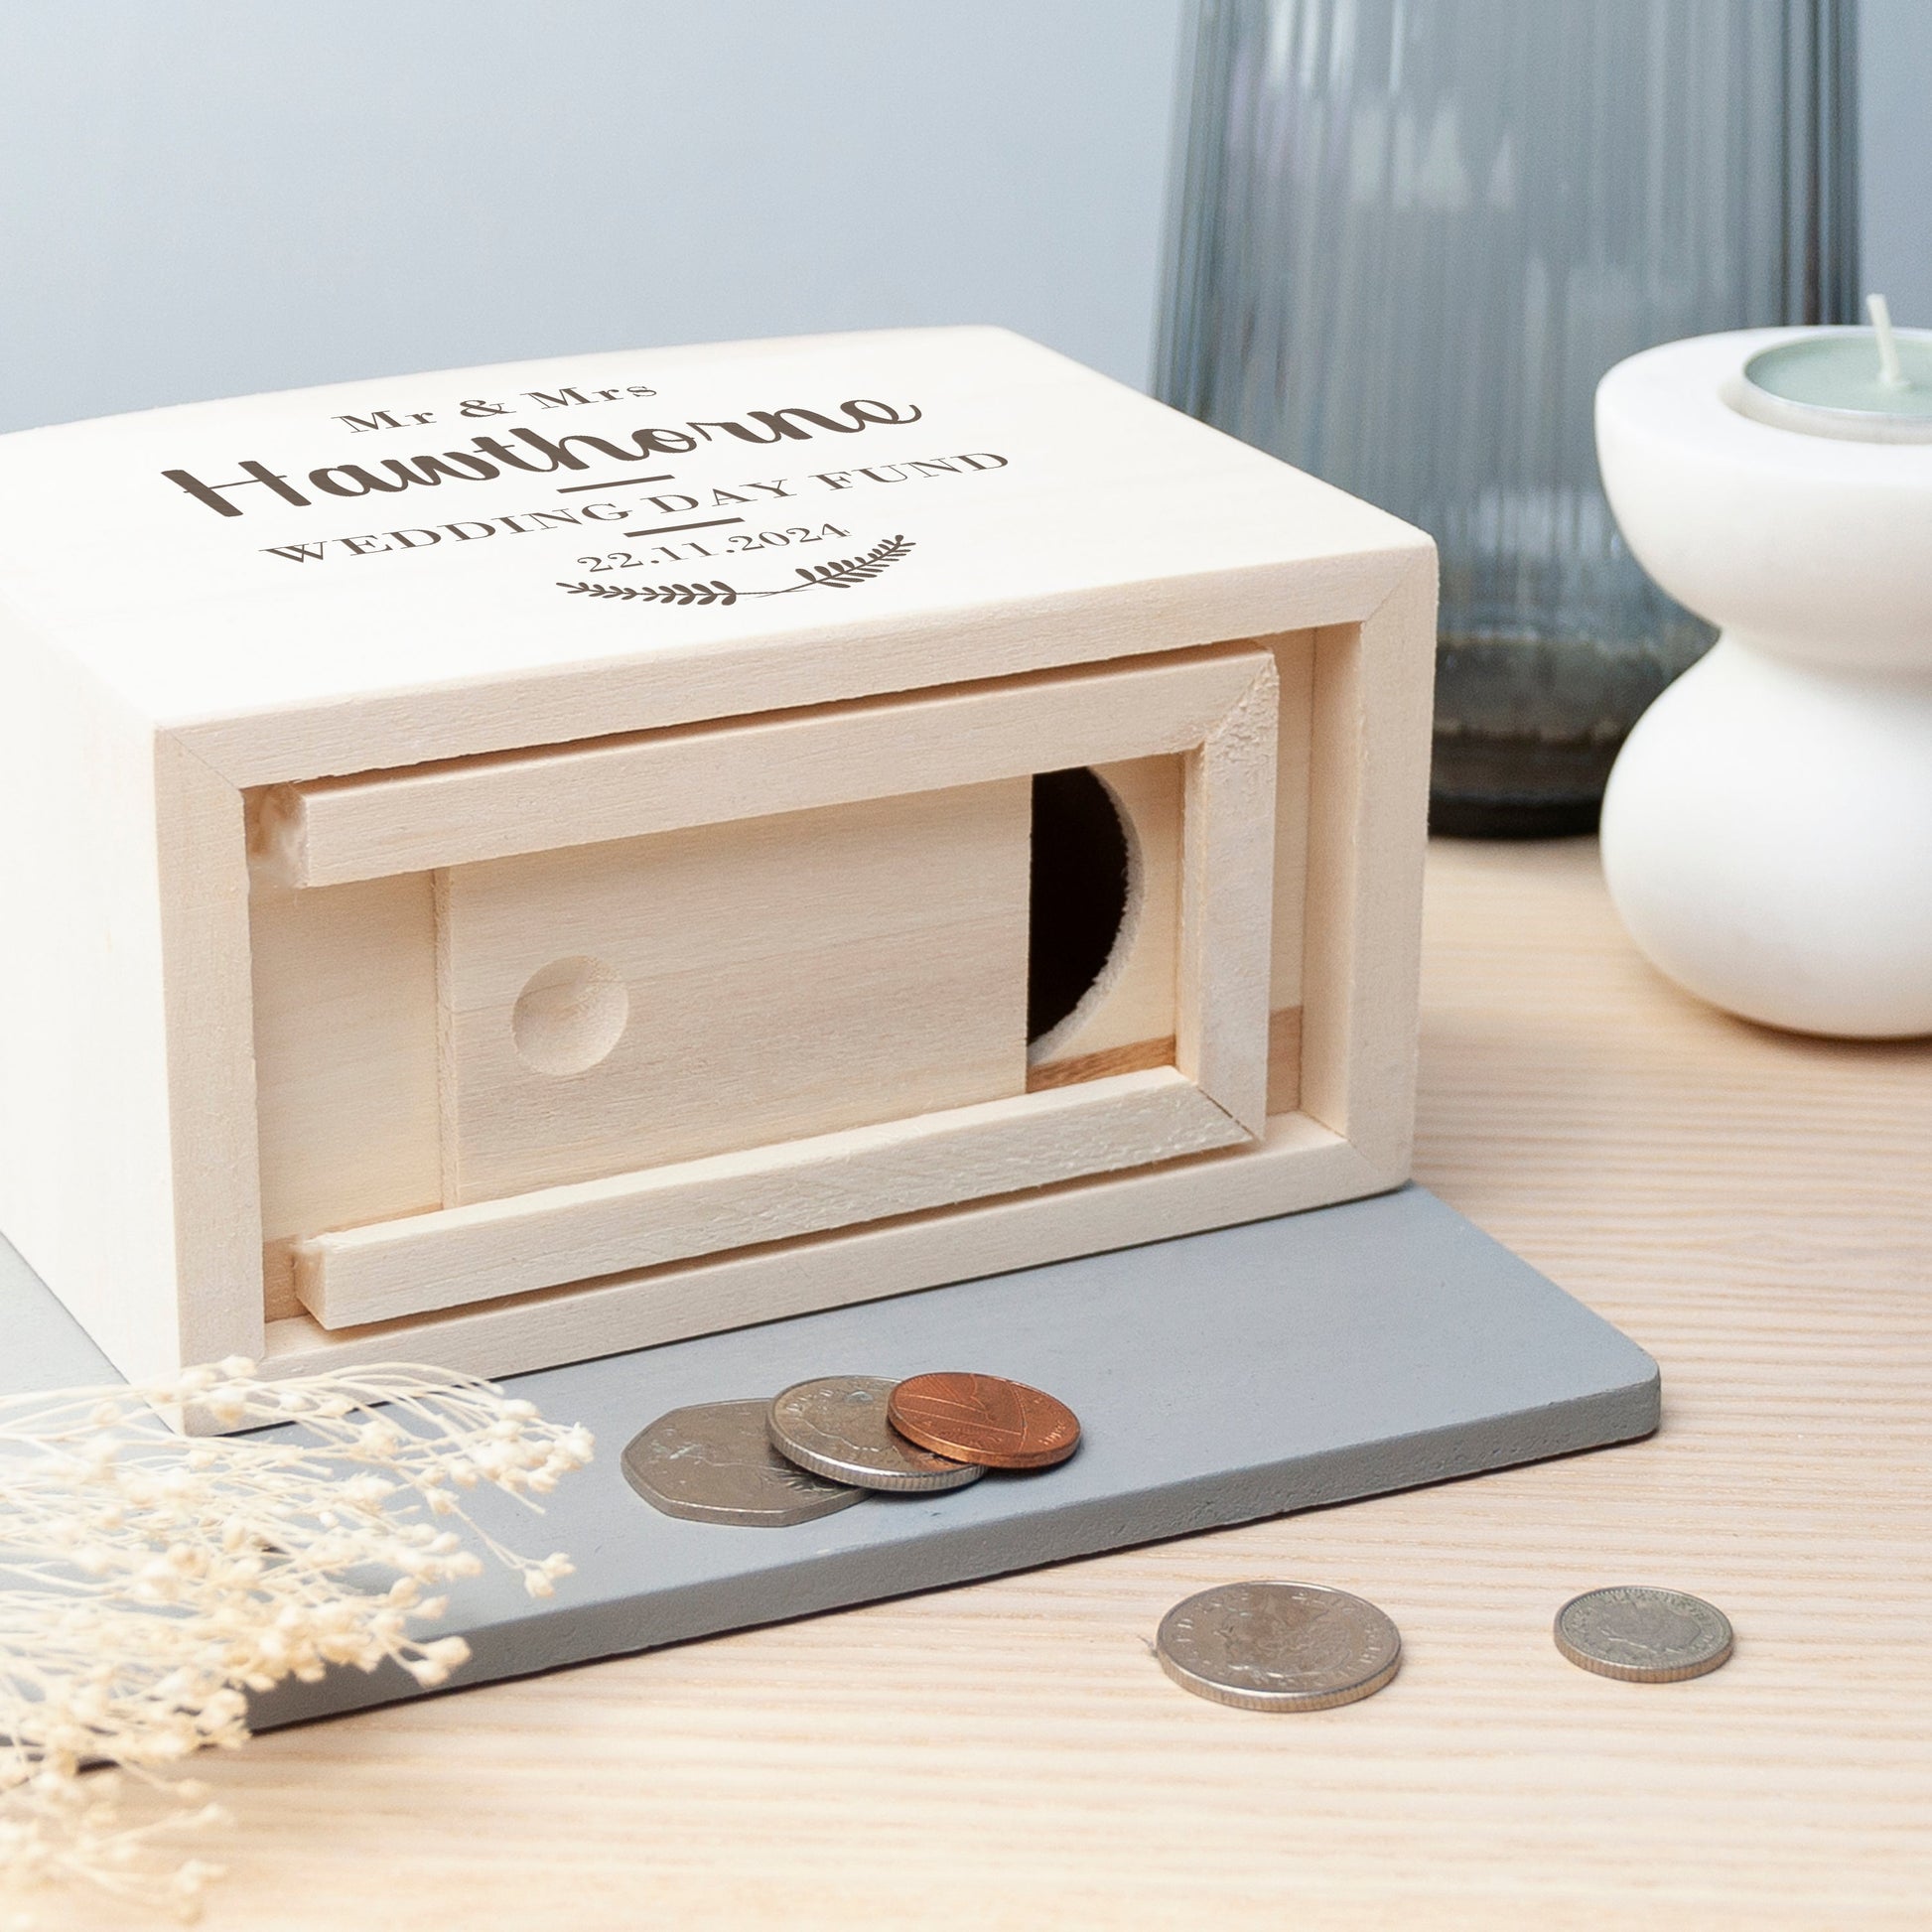 Personalized Money Boxes - Personalized Wedding Day Money Box 